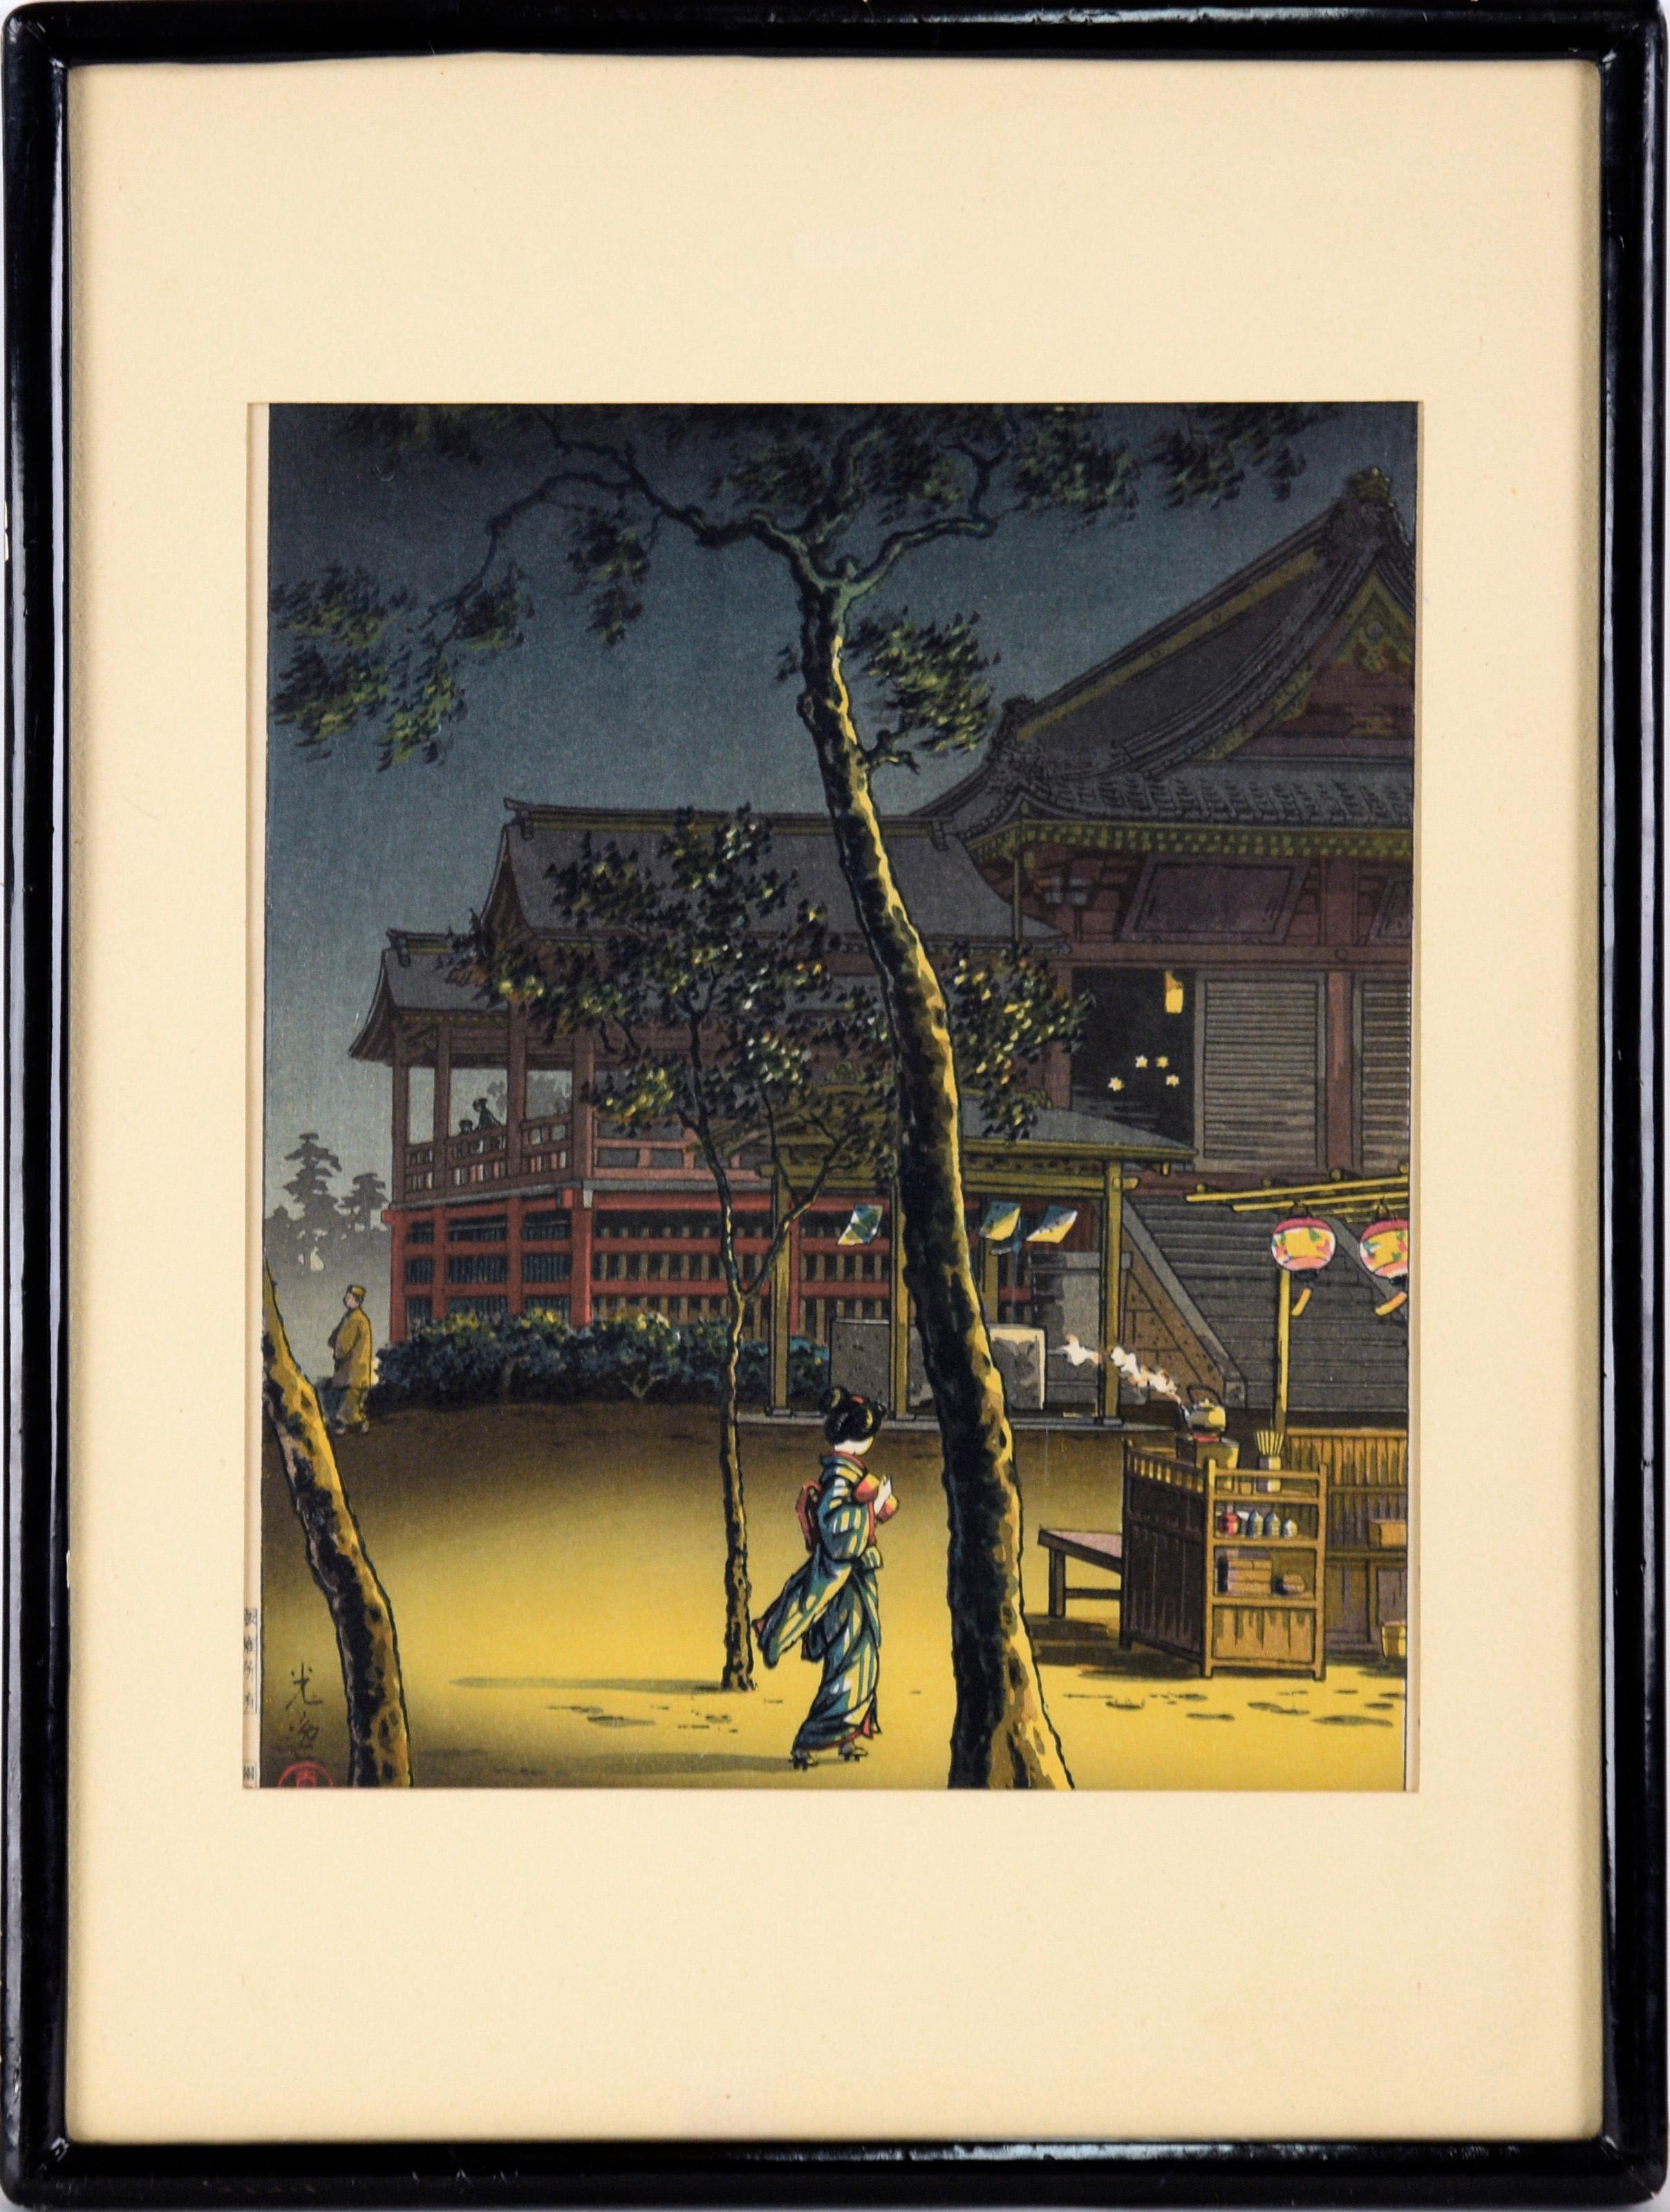 Tsuchiya Koitsu Figurative Print - Tea Shop at Kiyomizu (Early Printing) - Nocturnal Woodblock Print on Paper